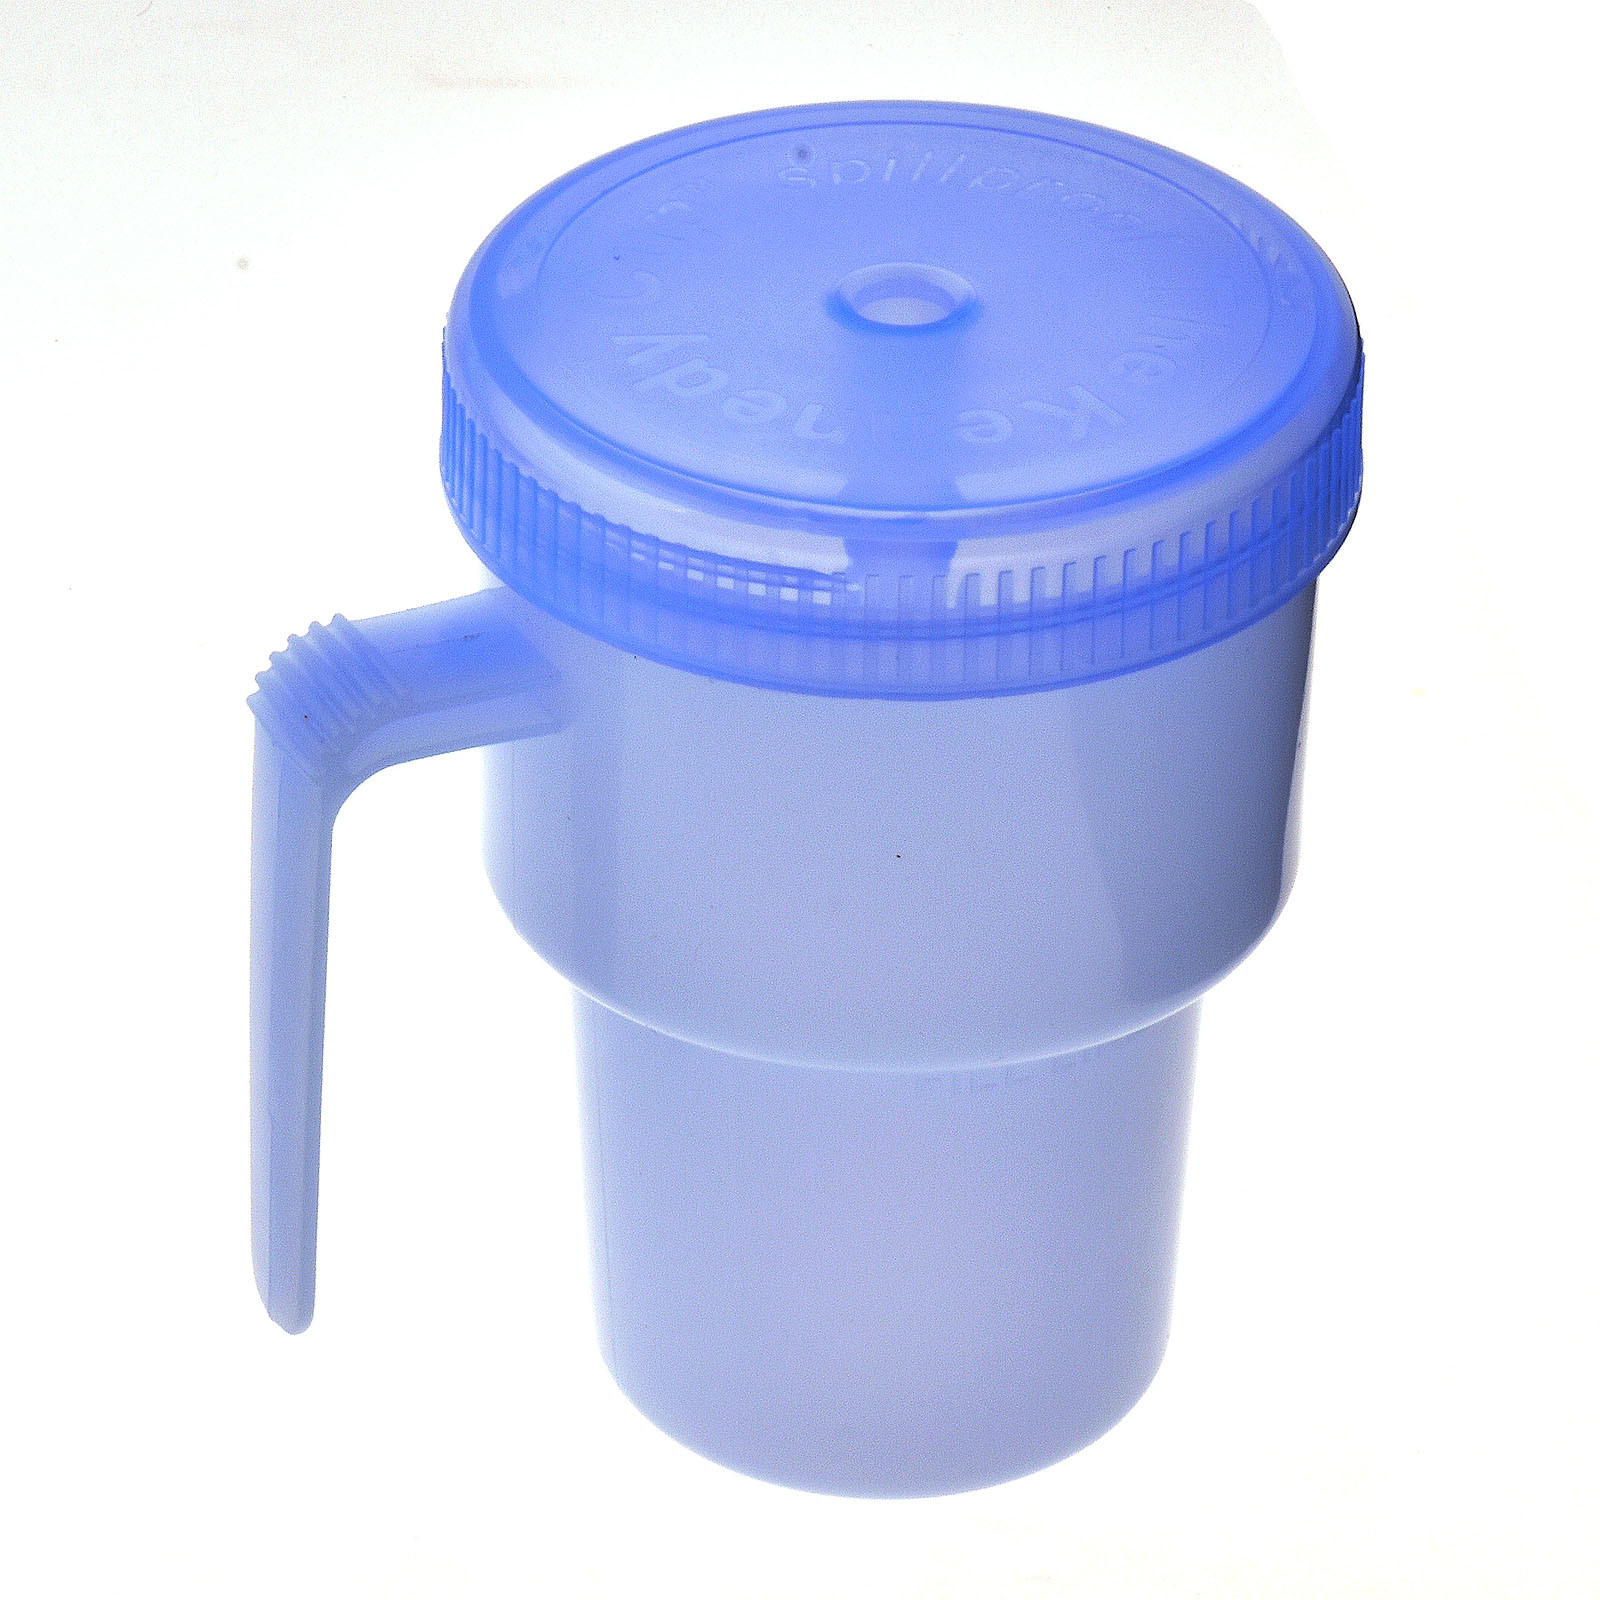 Insulated Mug with Lid, Adaptive Cups